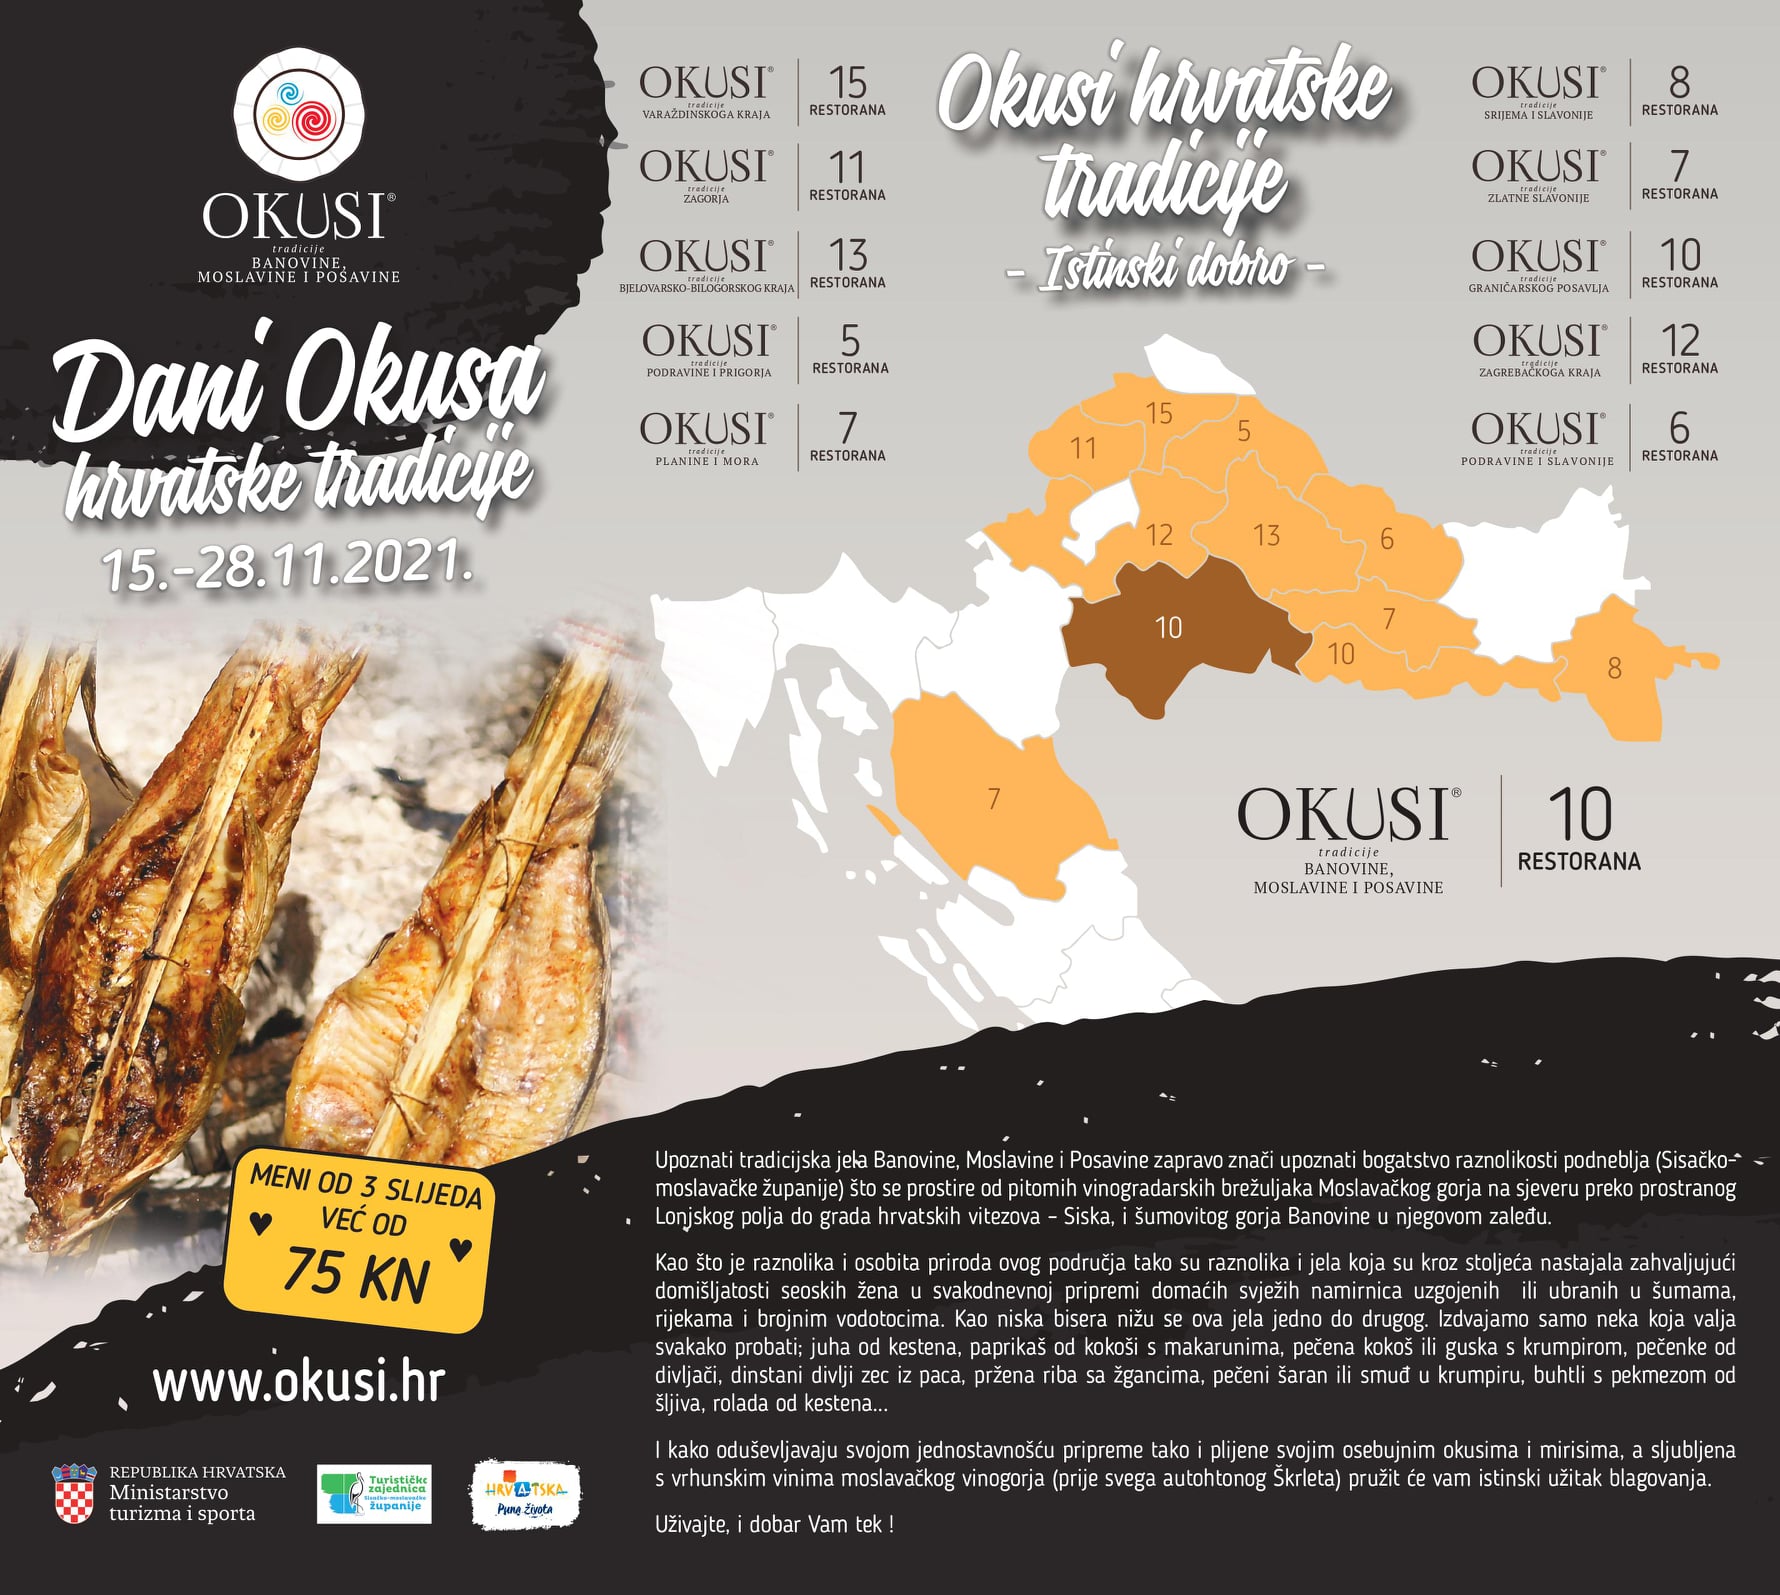 You are currently viewing Dani Okusa hrvatske tradicije